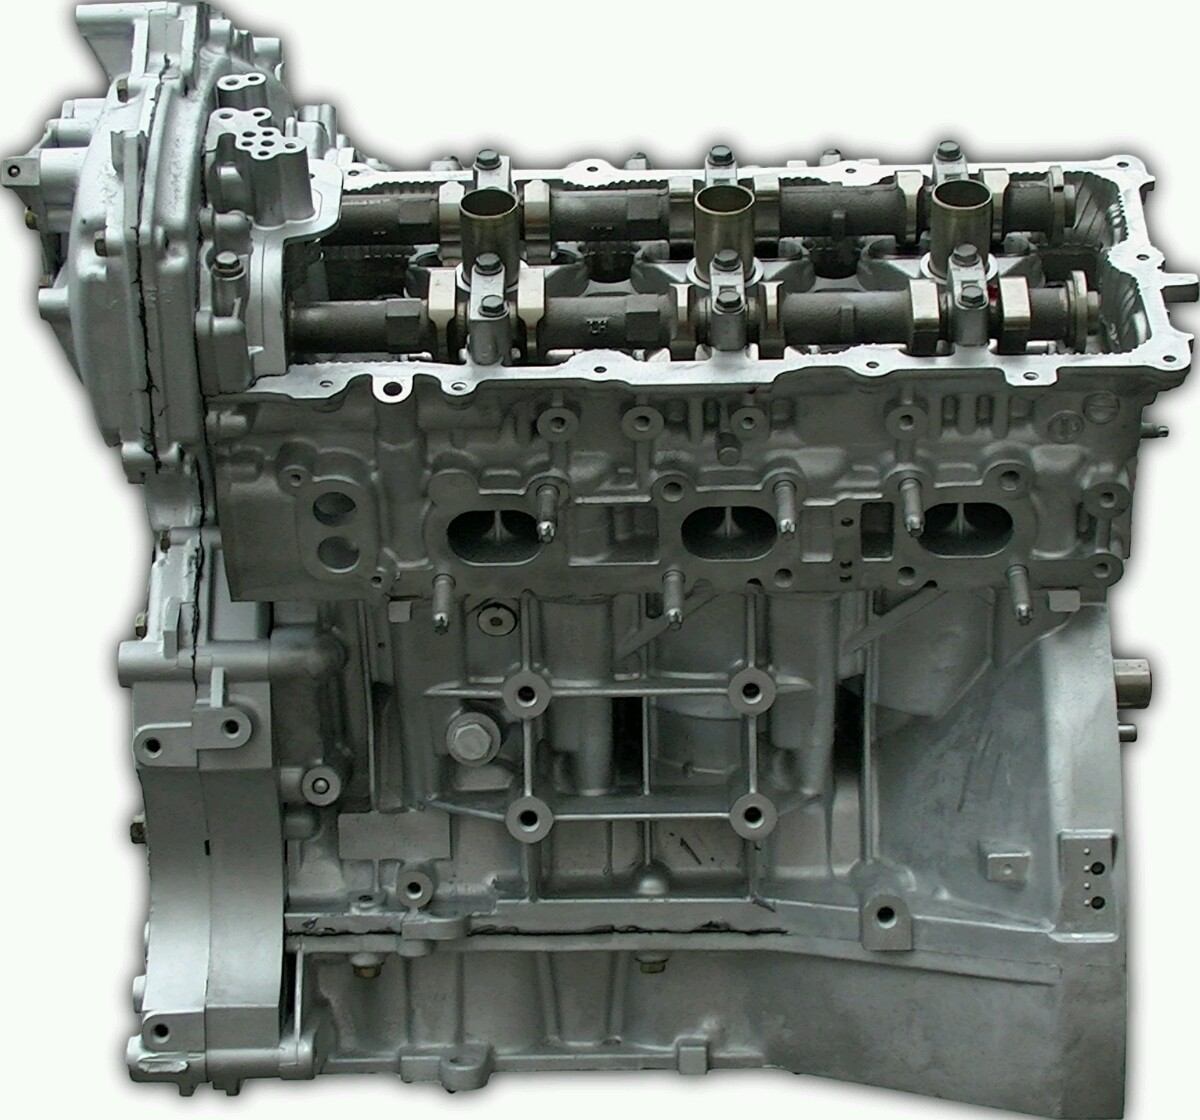 Motor Nissan Pathfinder 4 0